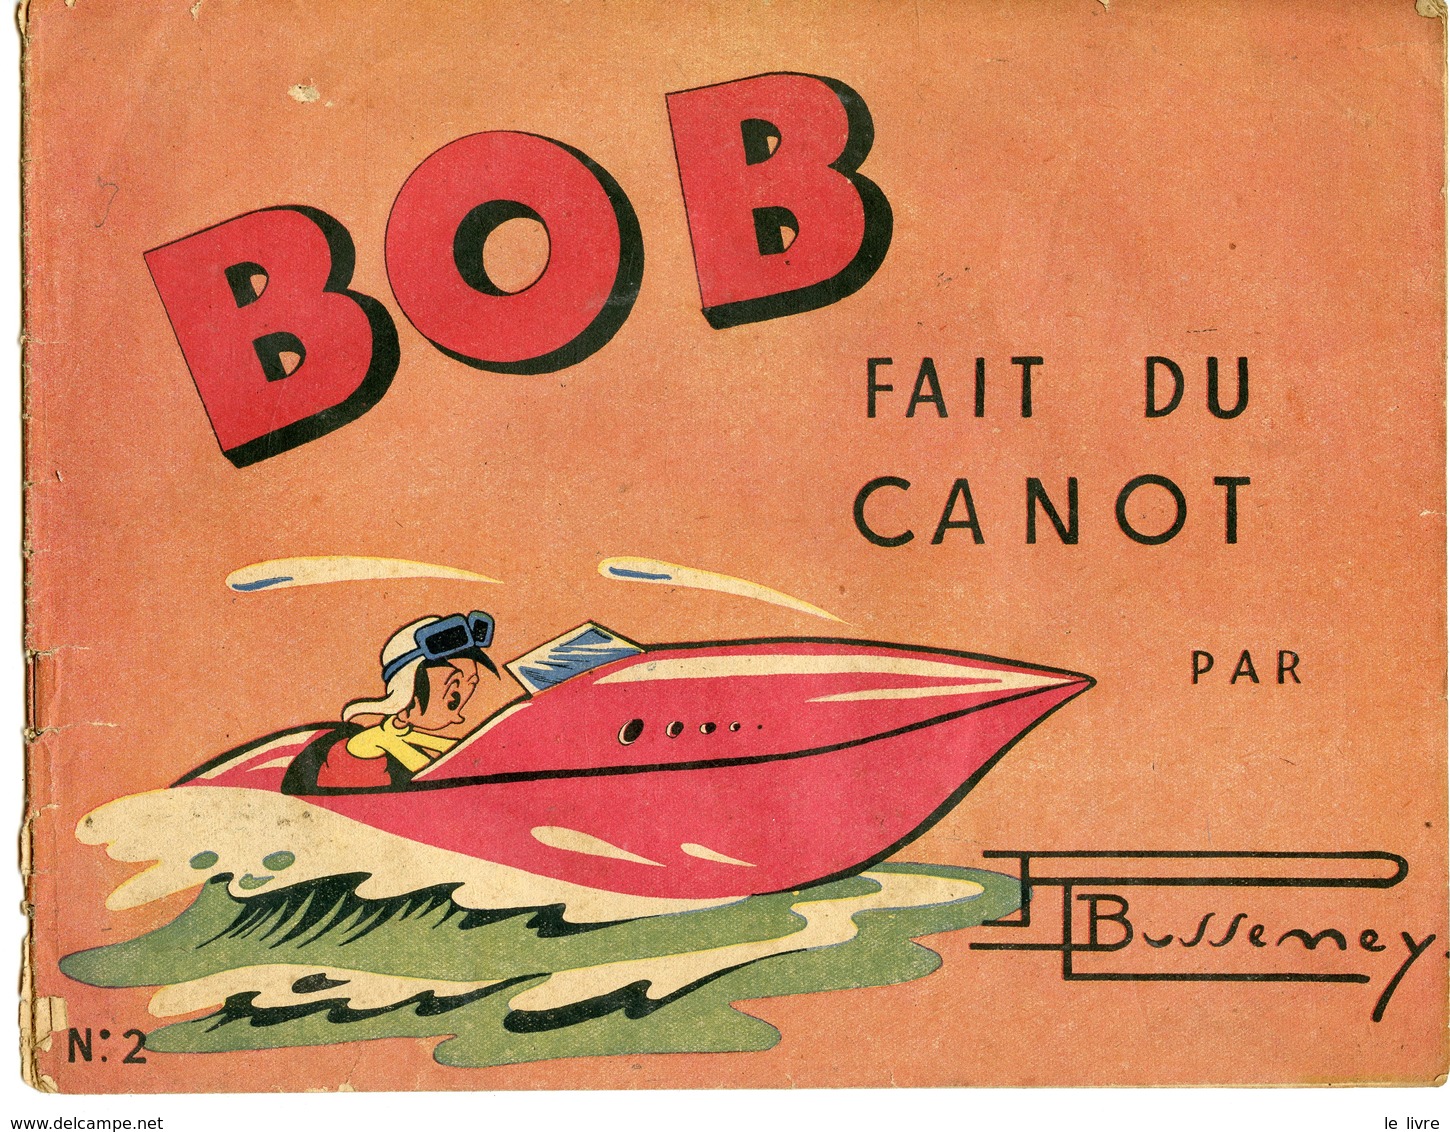 Bob fait du canot n2